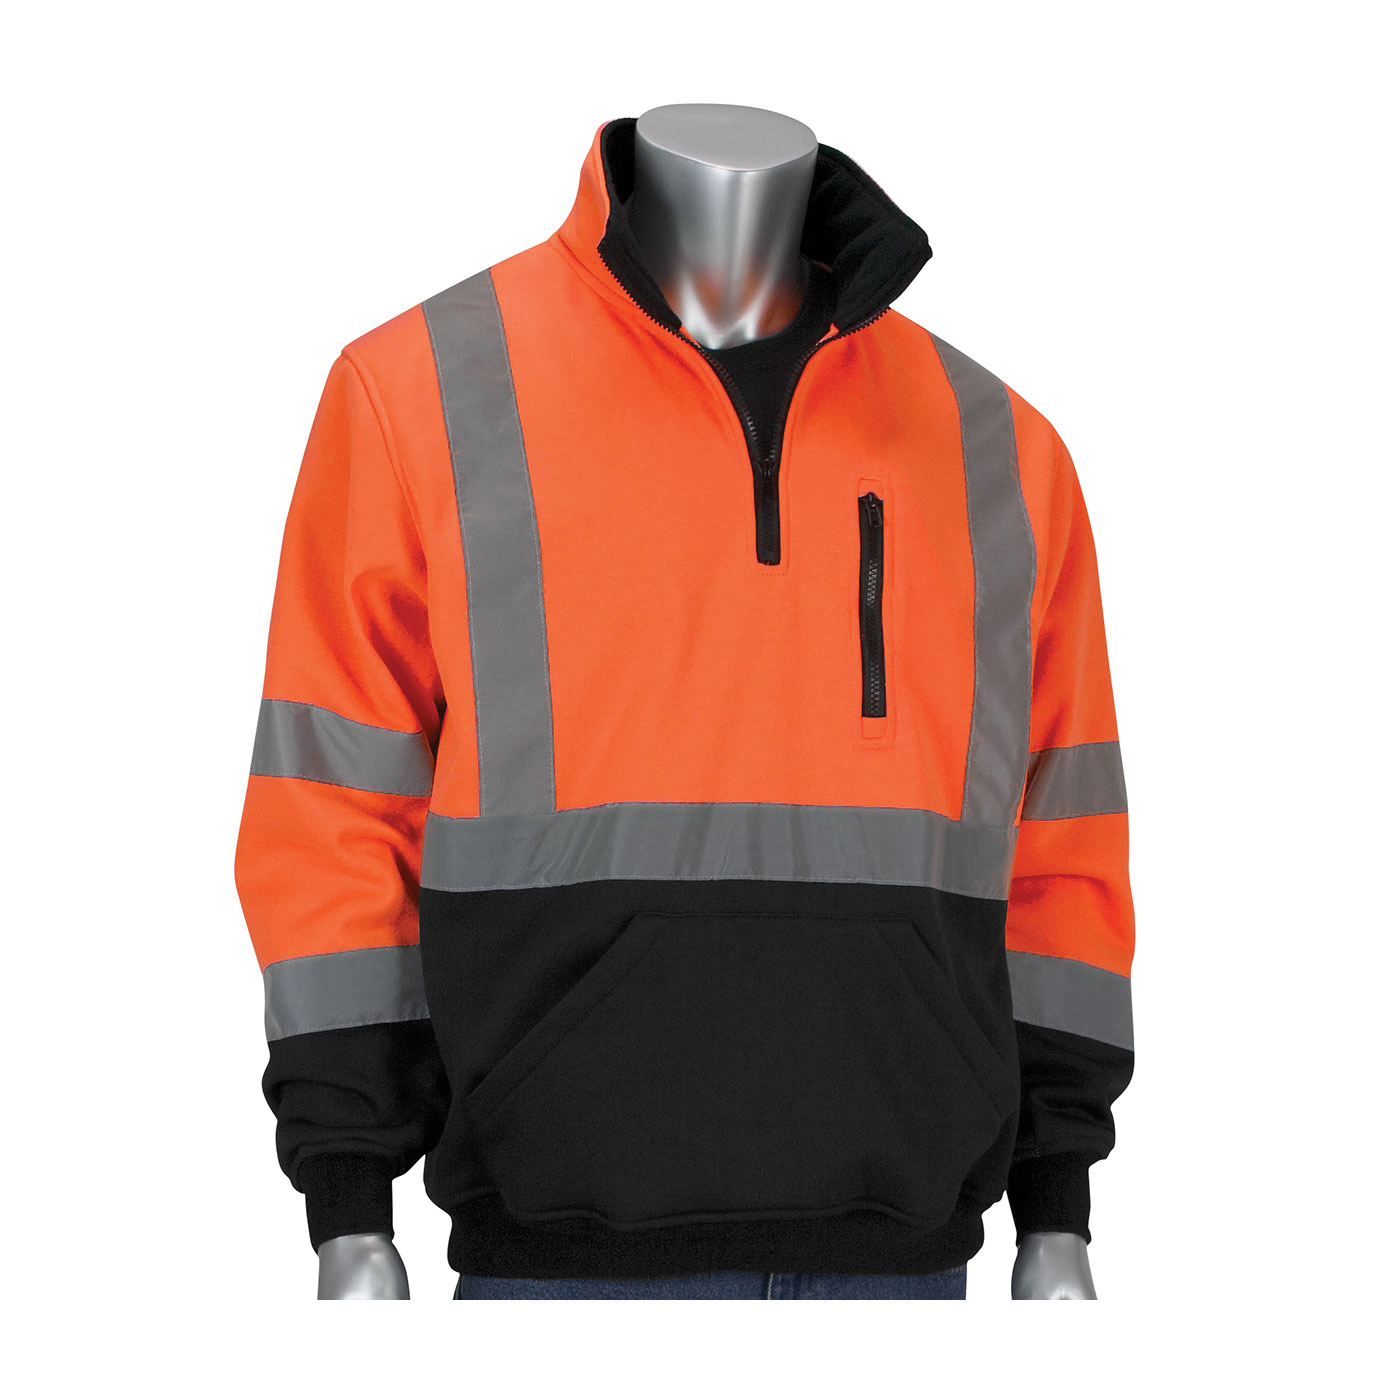 PIP® 323-1330B-OR/3X Sweatshirt With Black Bottom, Unisex, 3XL, Orange, 32.3 in L, Polyester Fleece